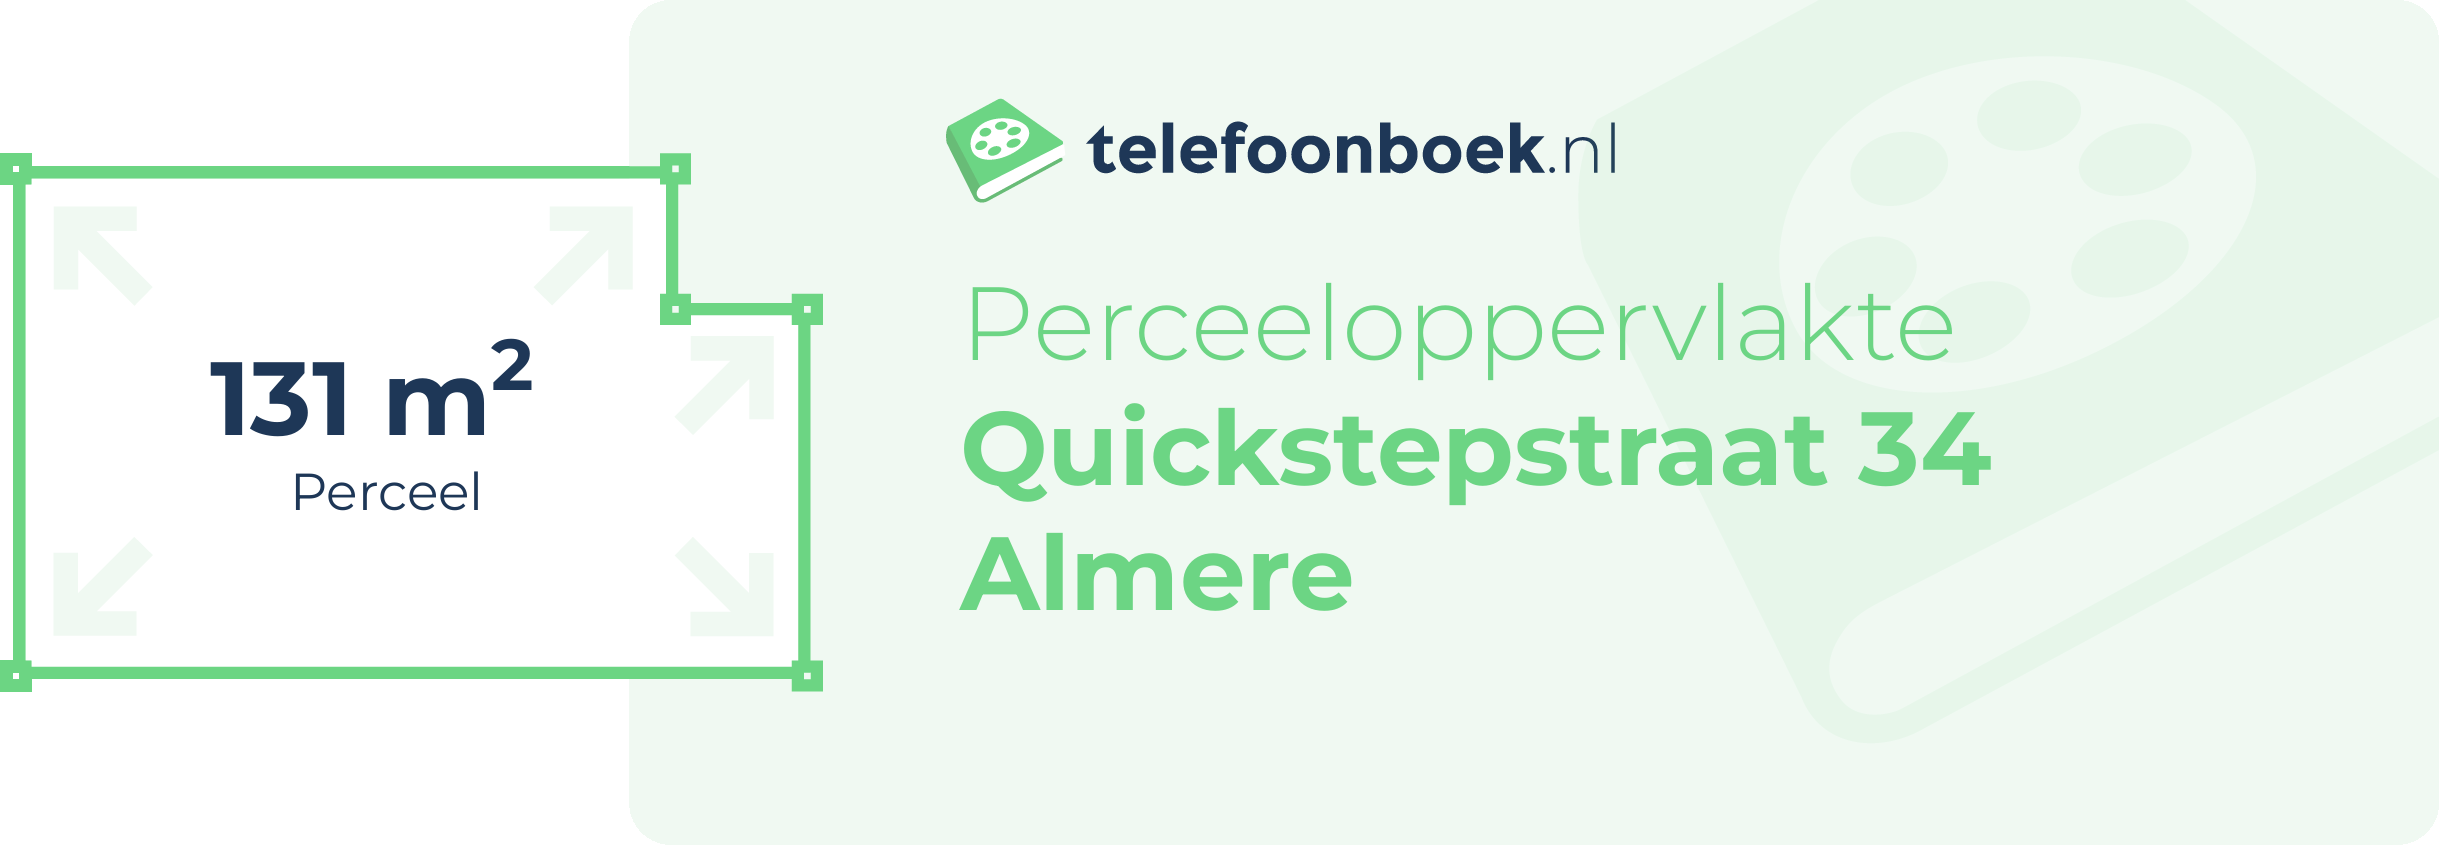 Perceeloppervlakte Quickstepstraat 34 Almere